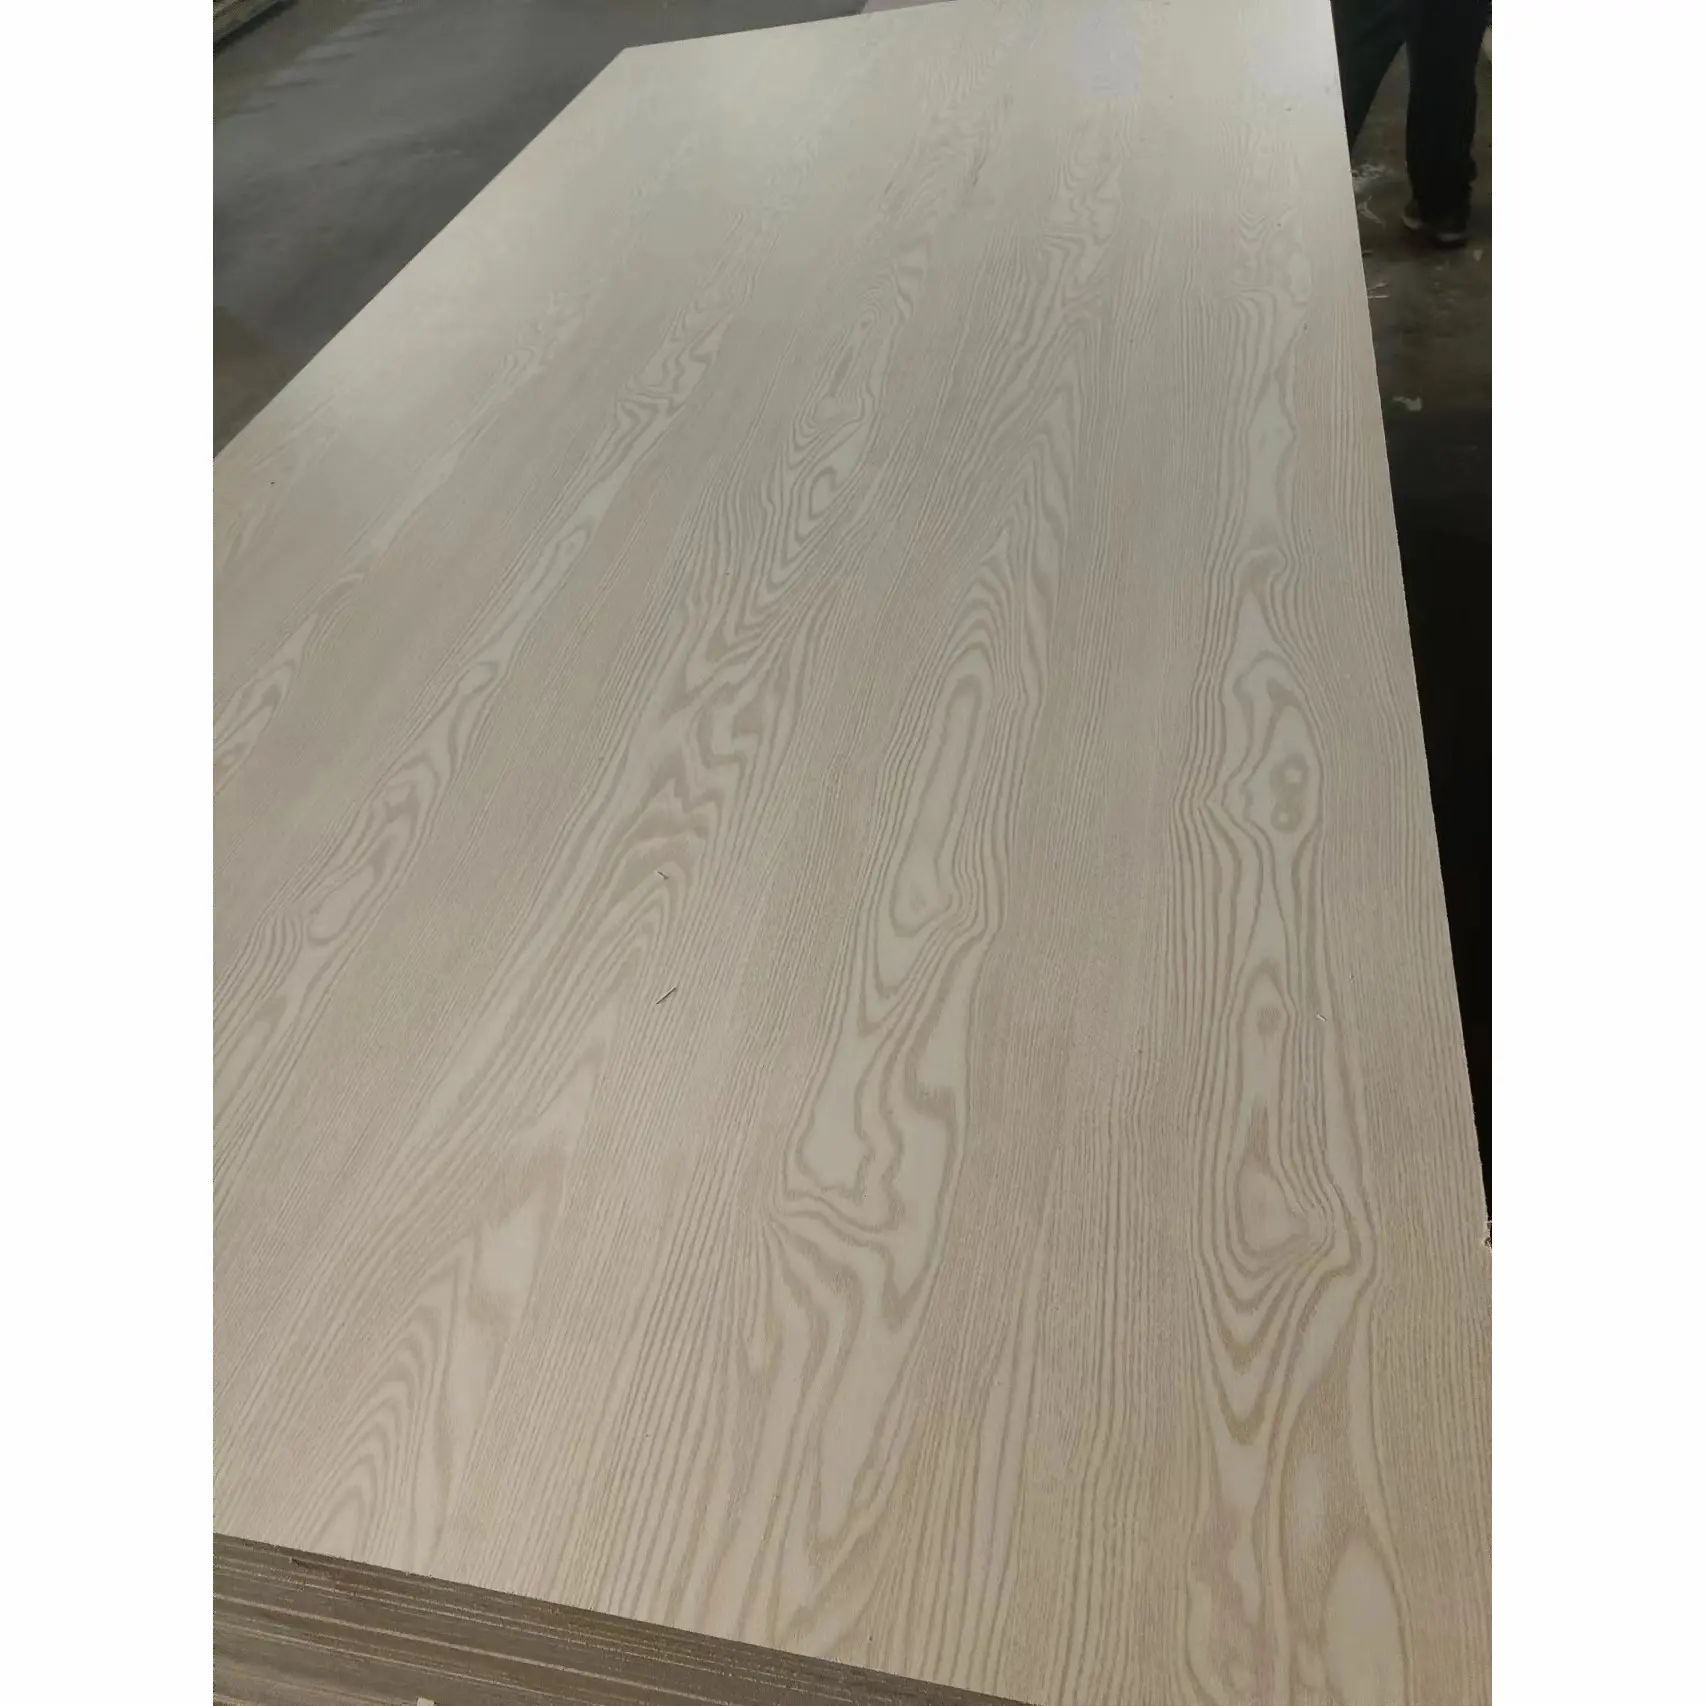 Maple Face Plywood 4x8 1220x2440 18mm Wood marine laminated plywood board Hardwood Poplar combi